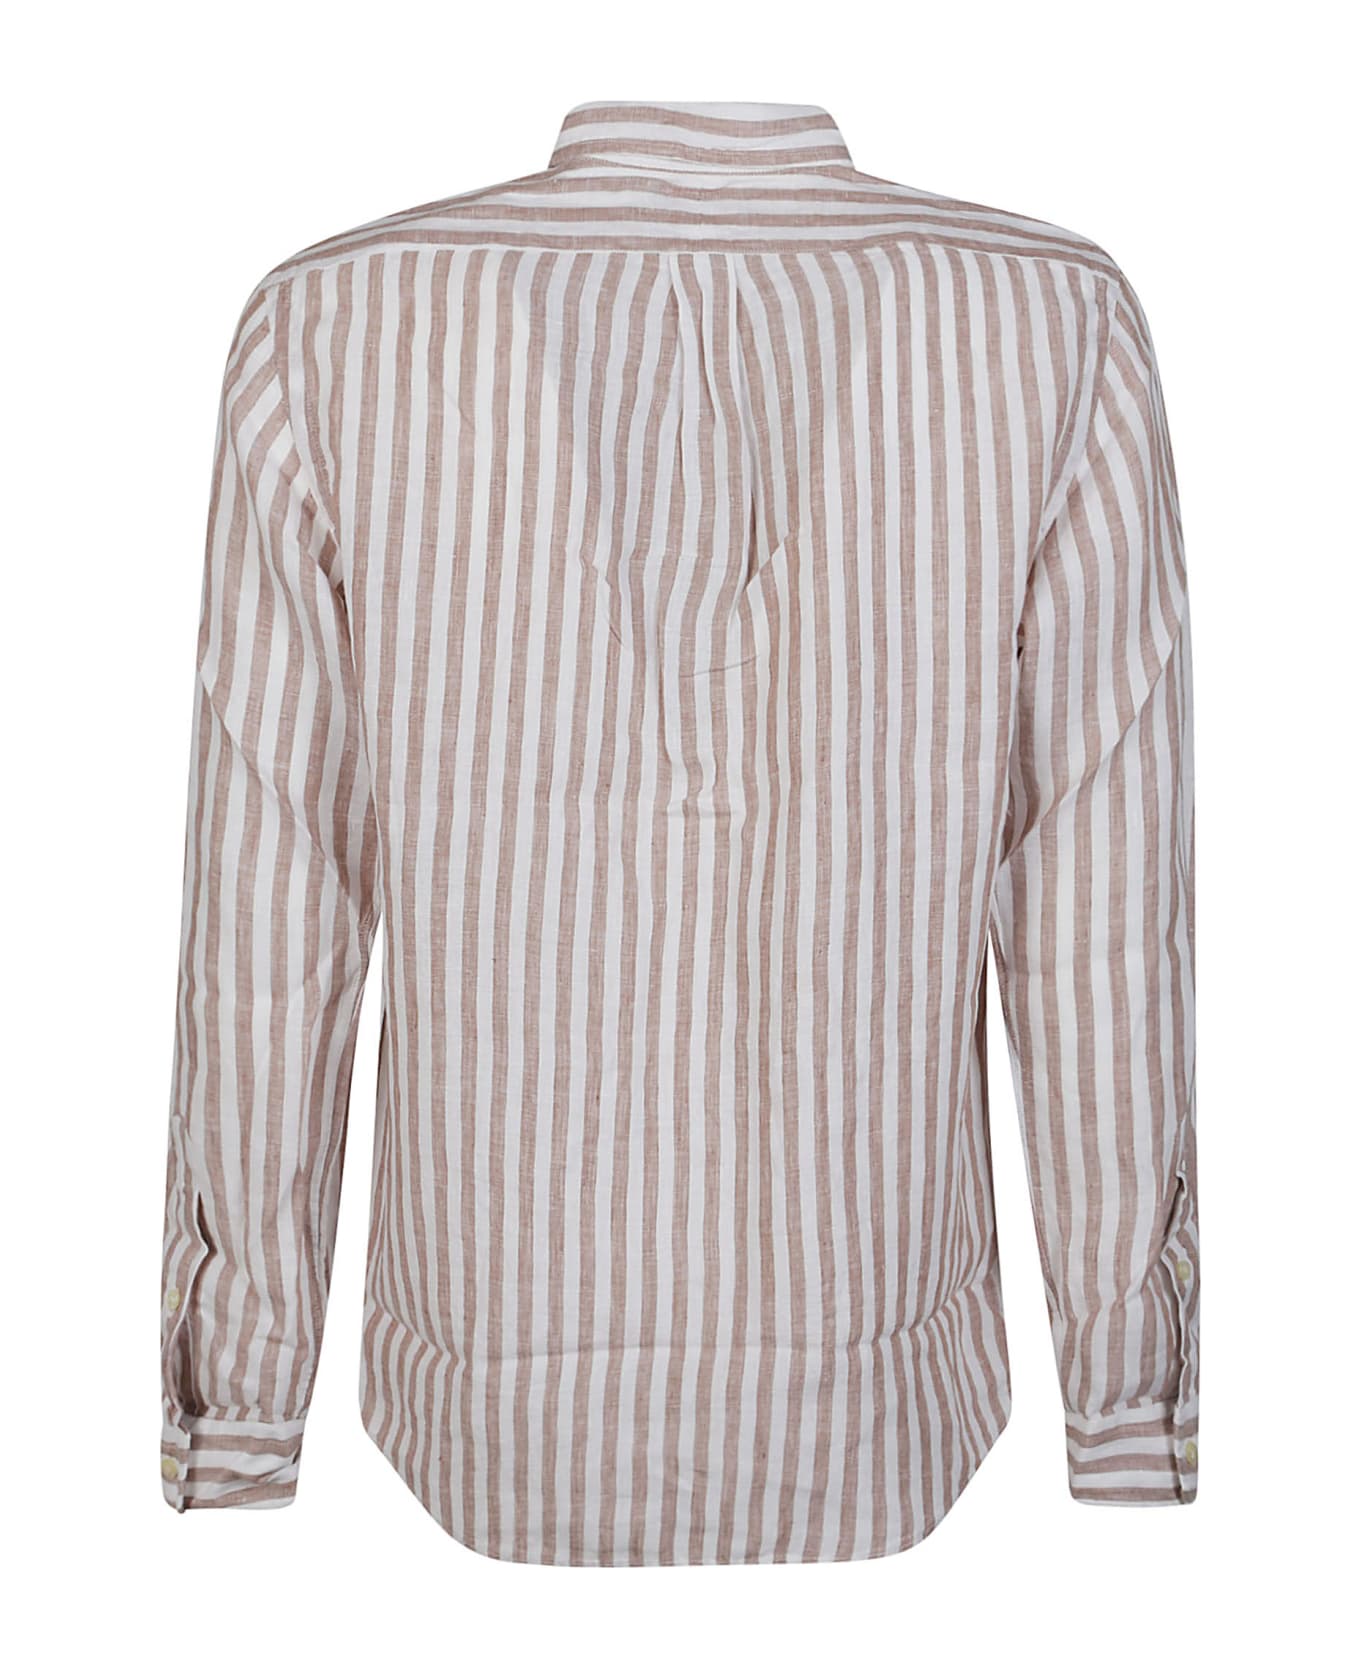 Polo Ralph Lauren Long Sleeve Shirt - Khaki/white